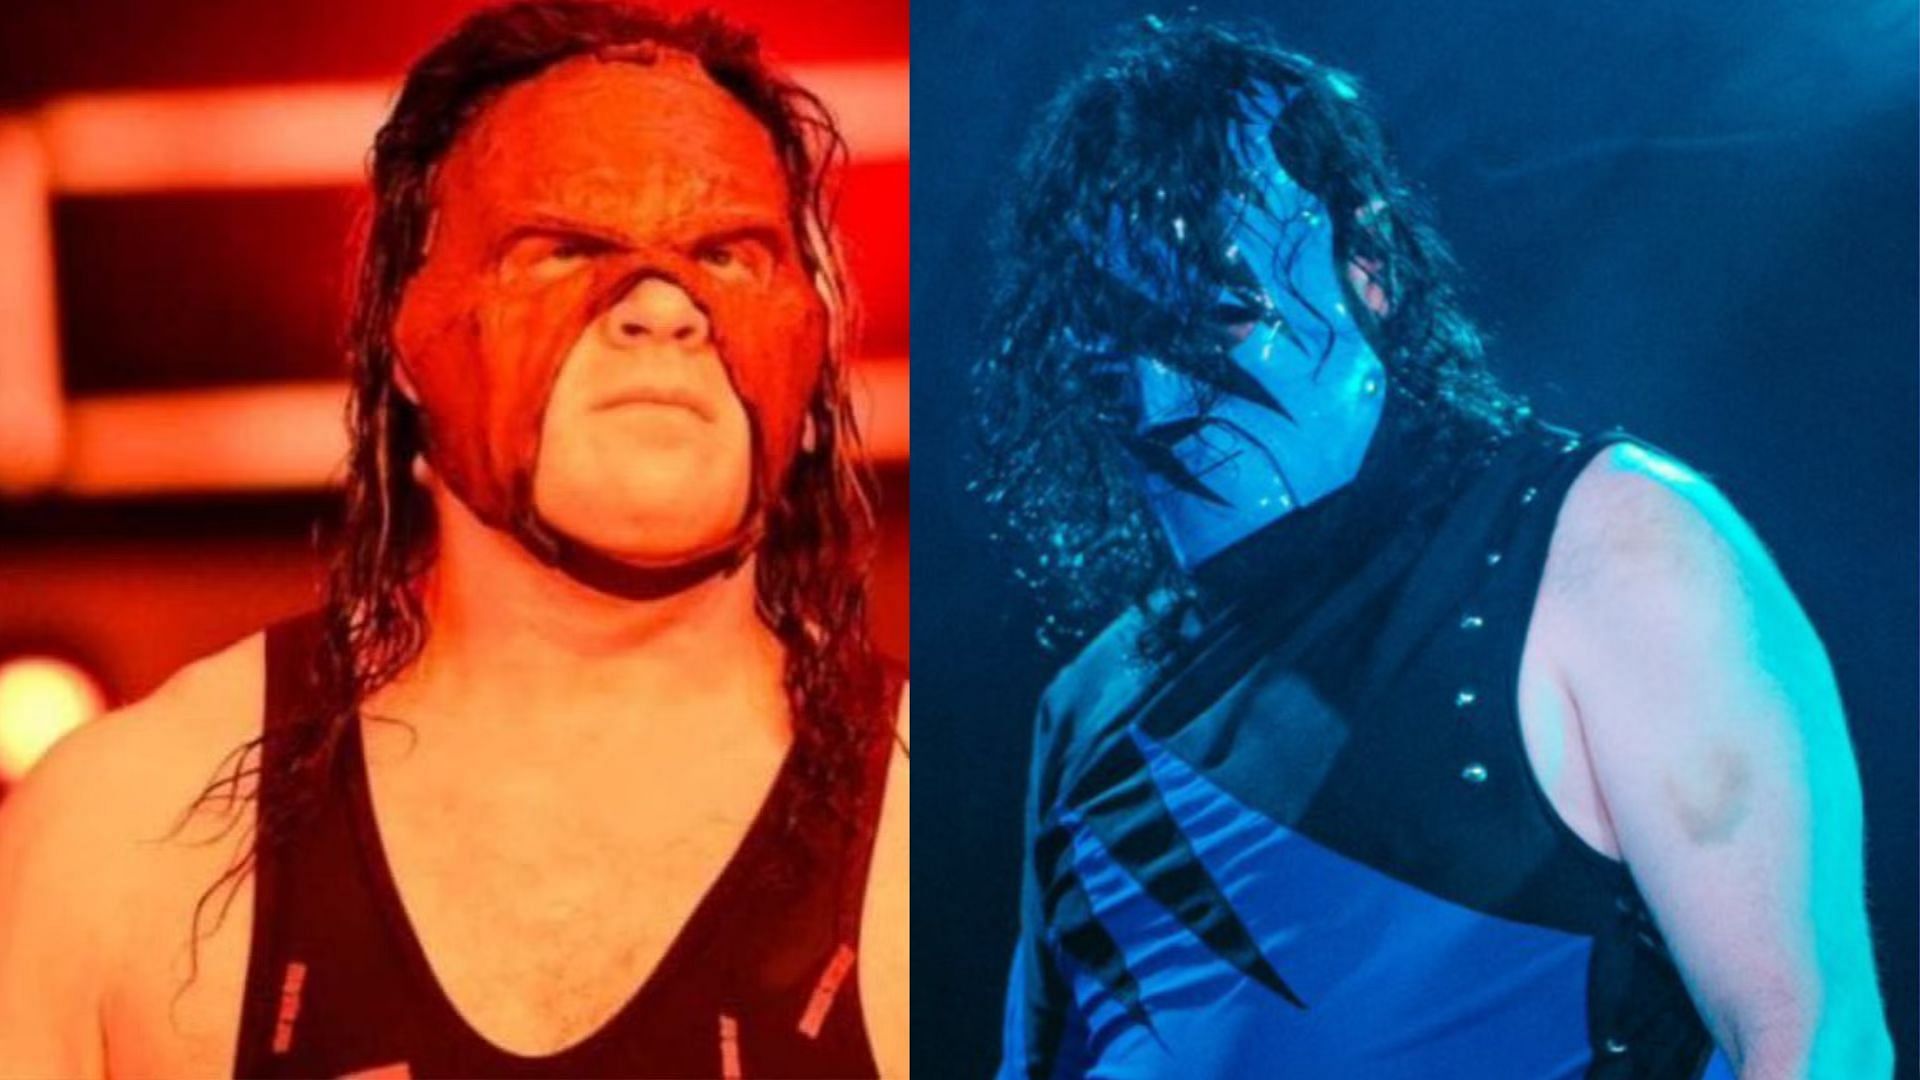 A new version of Kane has burst onto the scene.